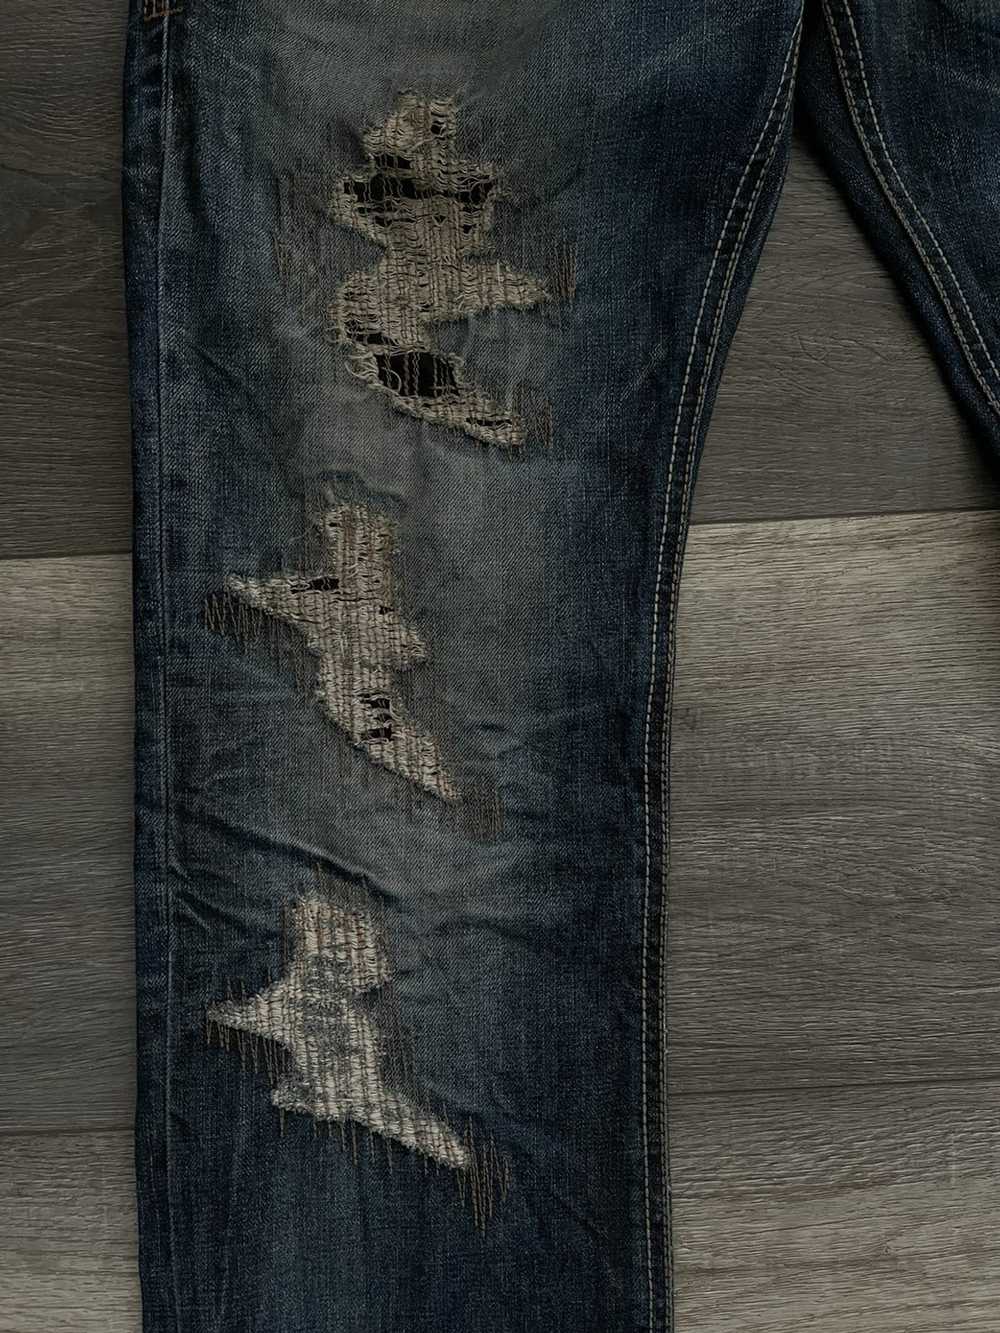 PPFM Buckaroo indigo jeans - image 2